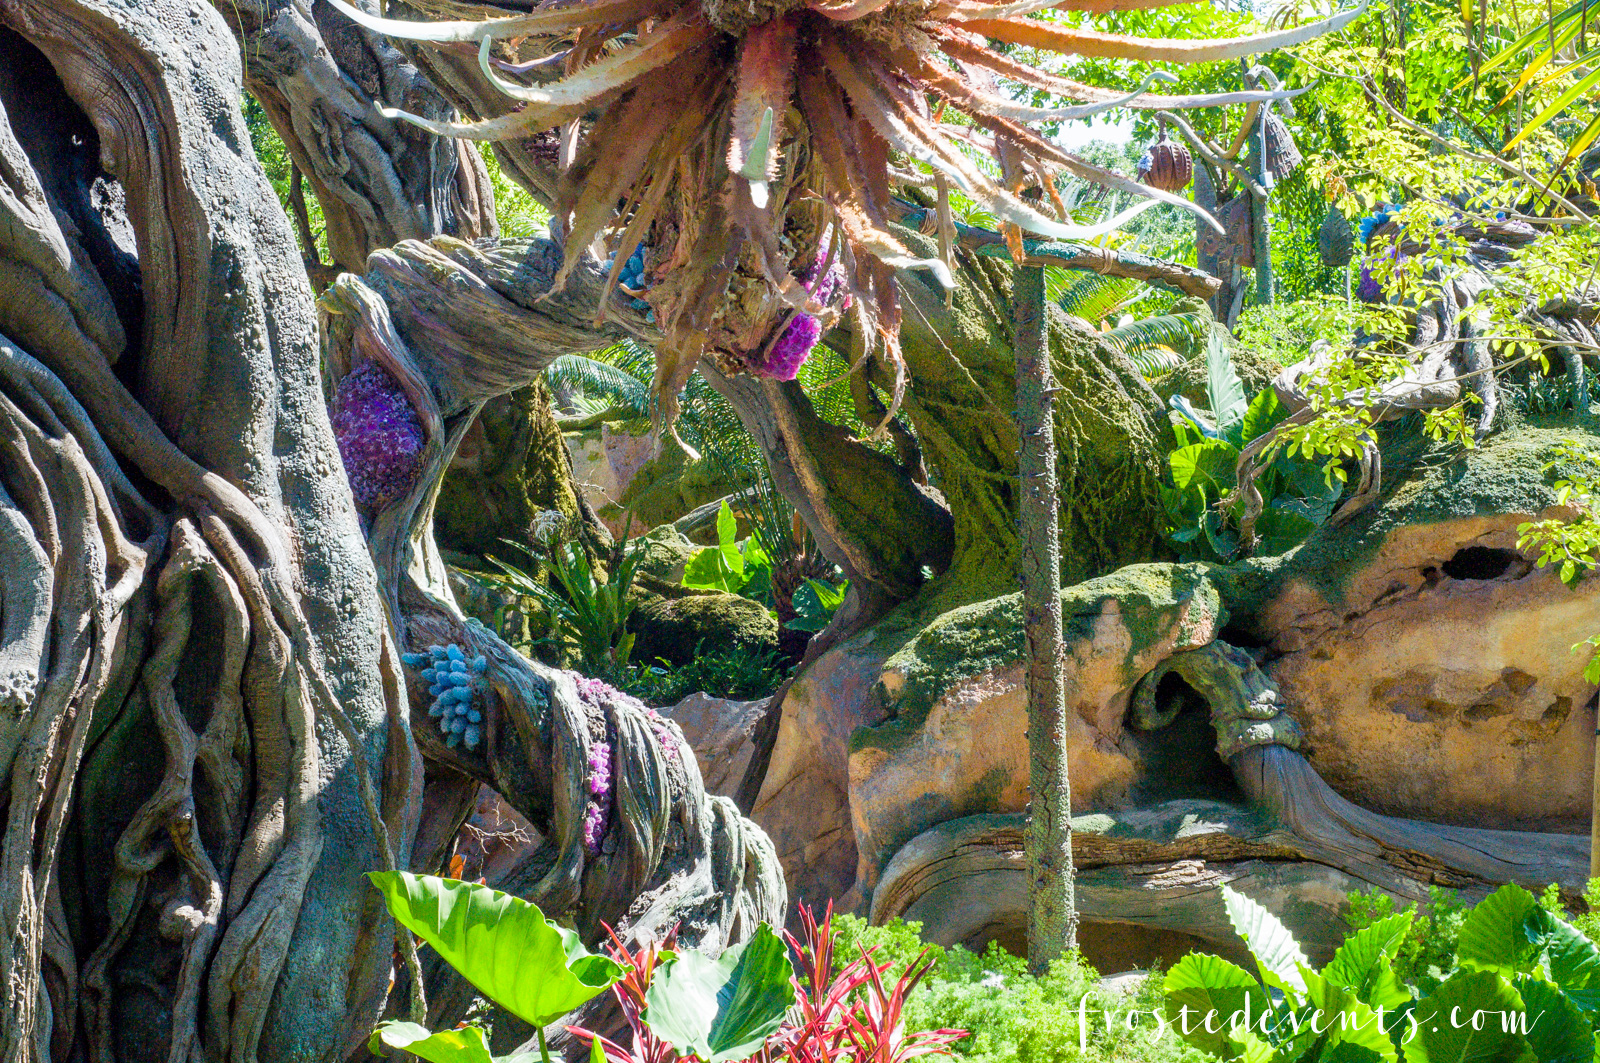 Disney Pandora World of Avatar at Disney's Animal Kingdom Theme Park Walt DIsney World Orlando Florida via travel blogger Misty Nelson family vacation 